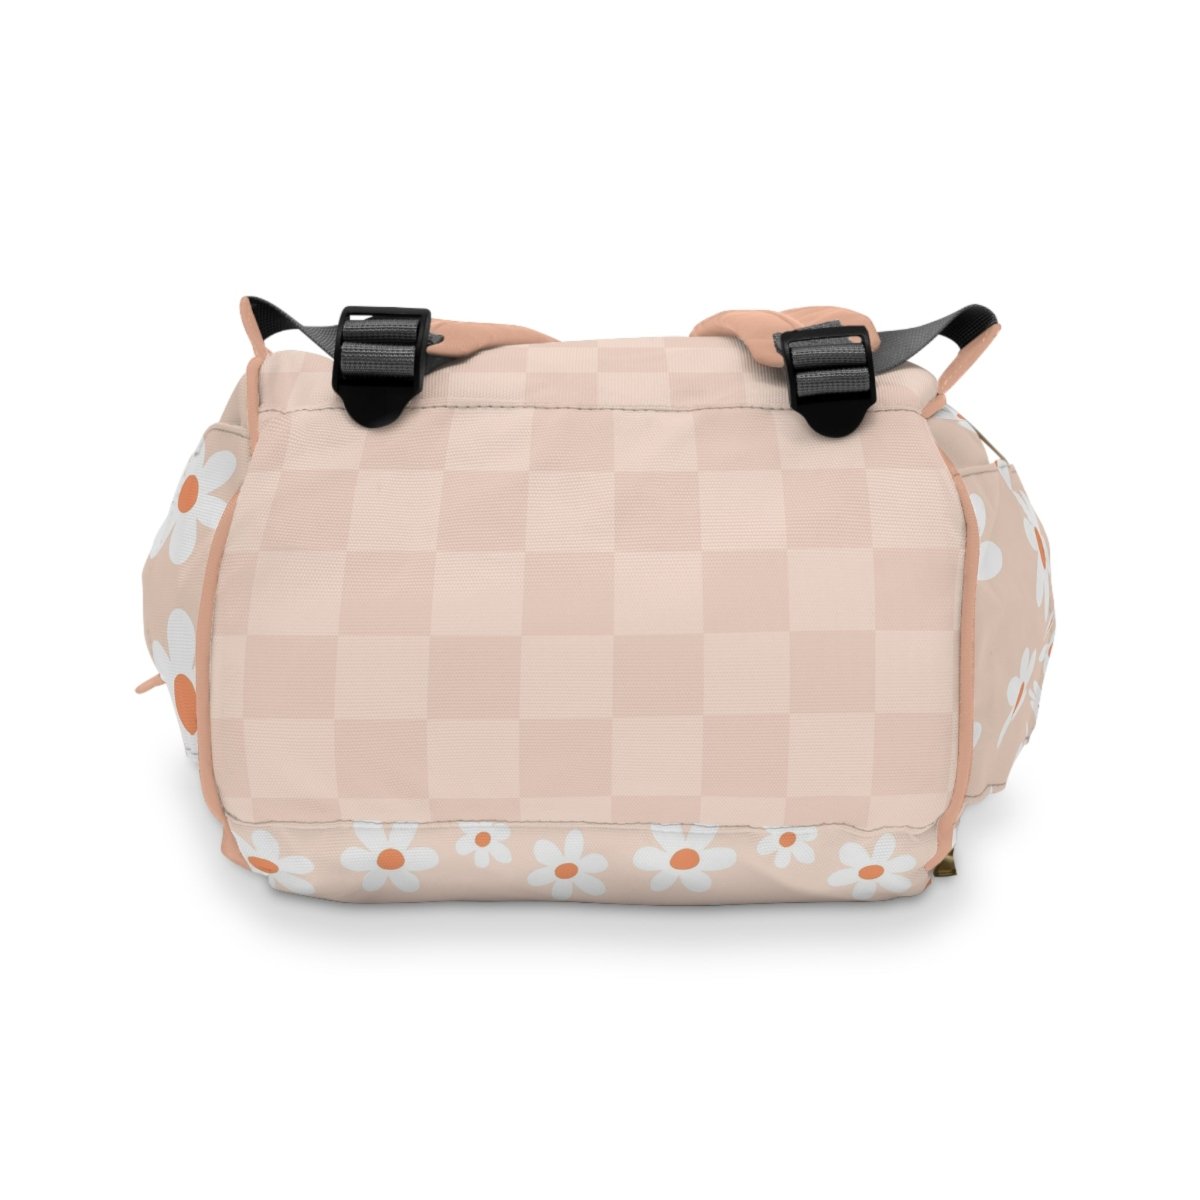 Daisy Personalized Backpack Diaper Bag - Diaper Bag